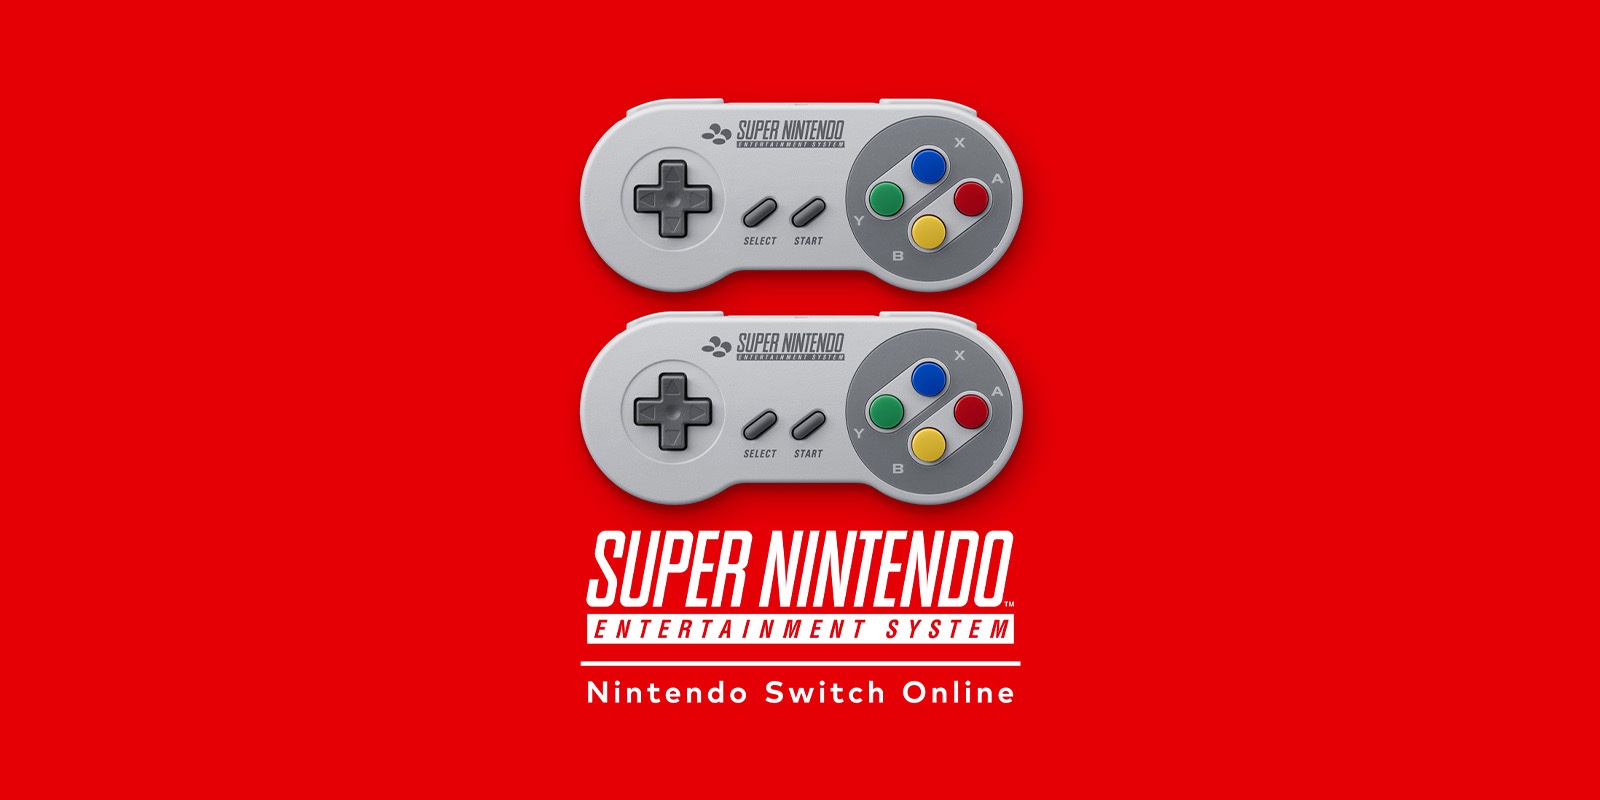 NERD Provides Emulation Technology for the Super Nintendo Entertainment System™ Nintendo Switch Online